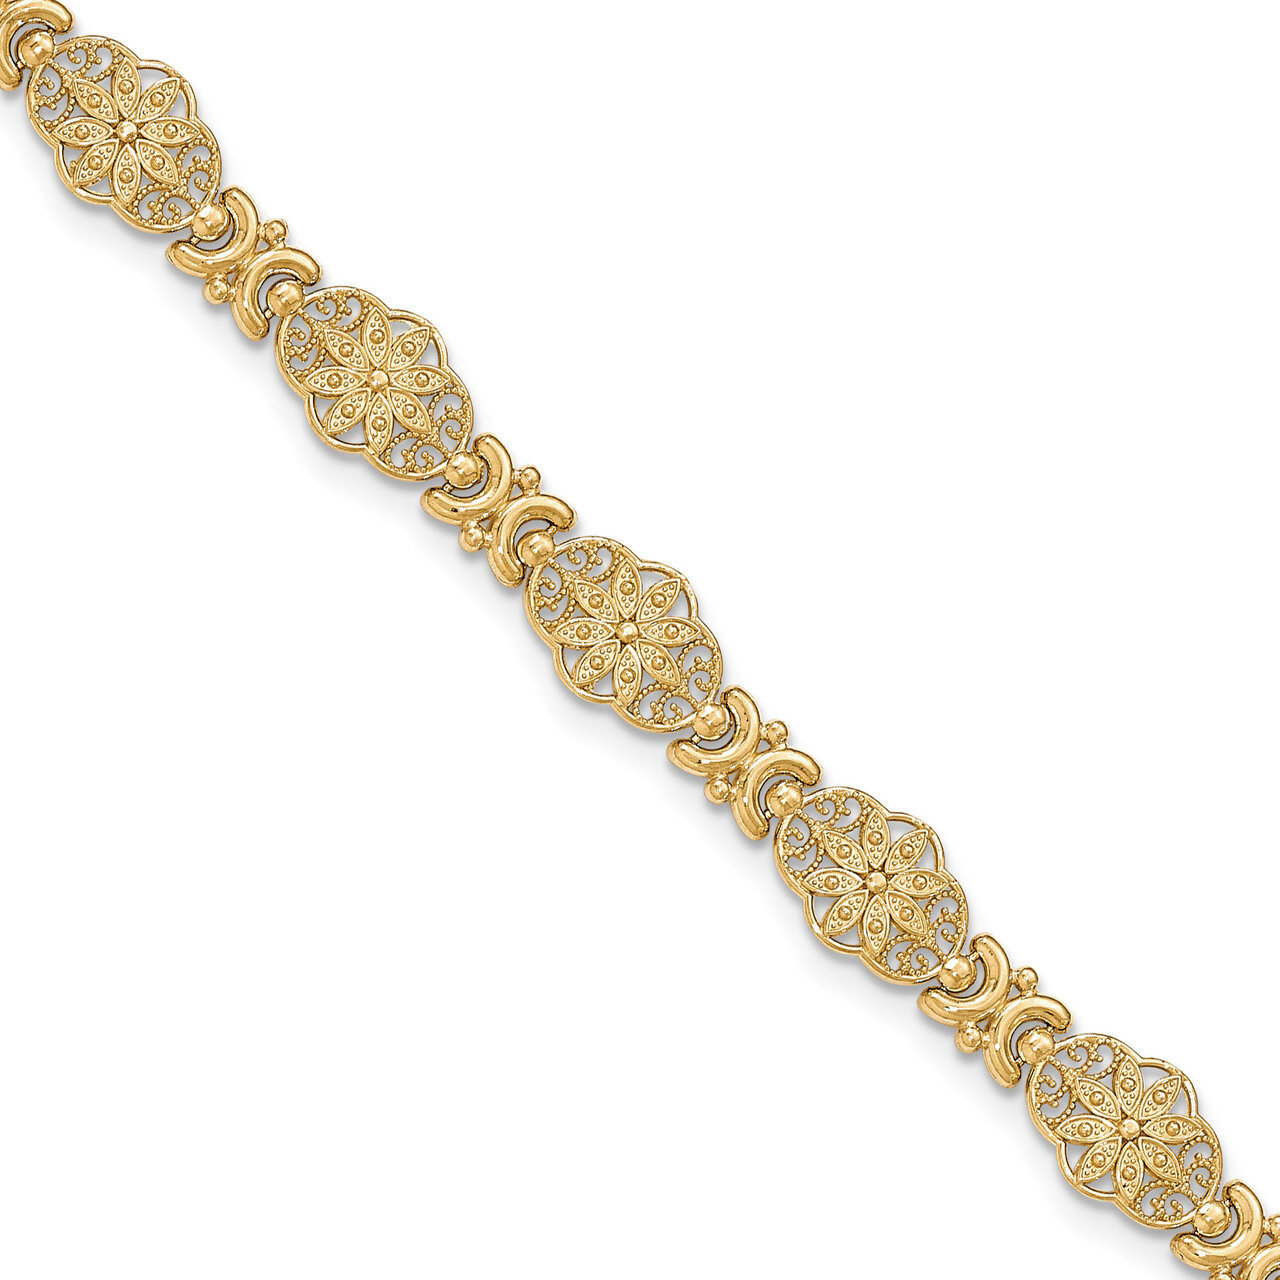 7.5 Inch Flower with Scalloped Edge Link Bracelet 14k Gold FB1449-7.5